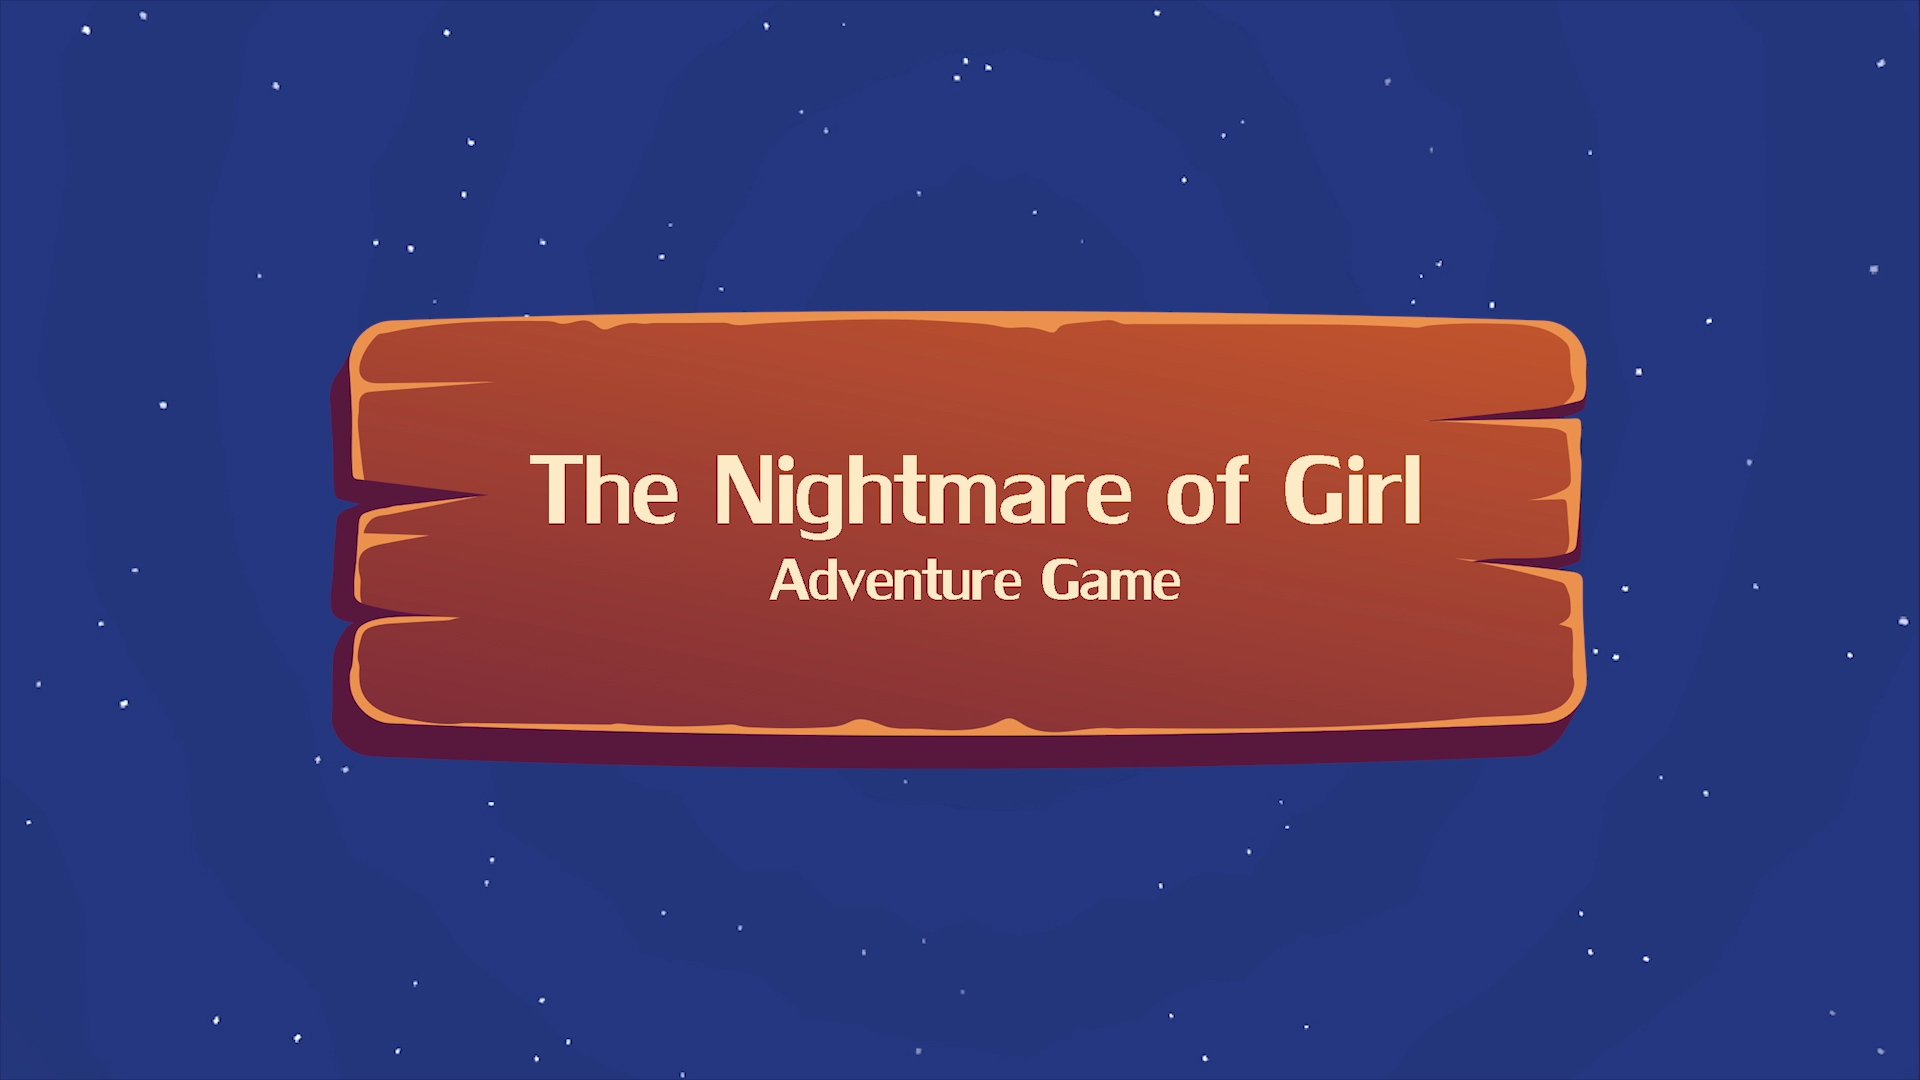 The Nightmare of Girl